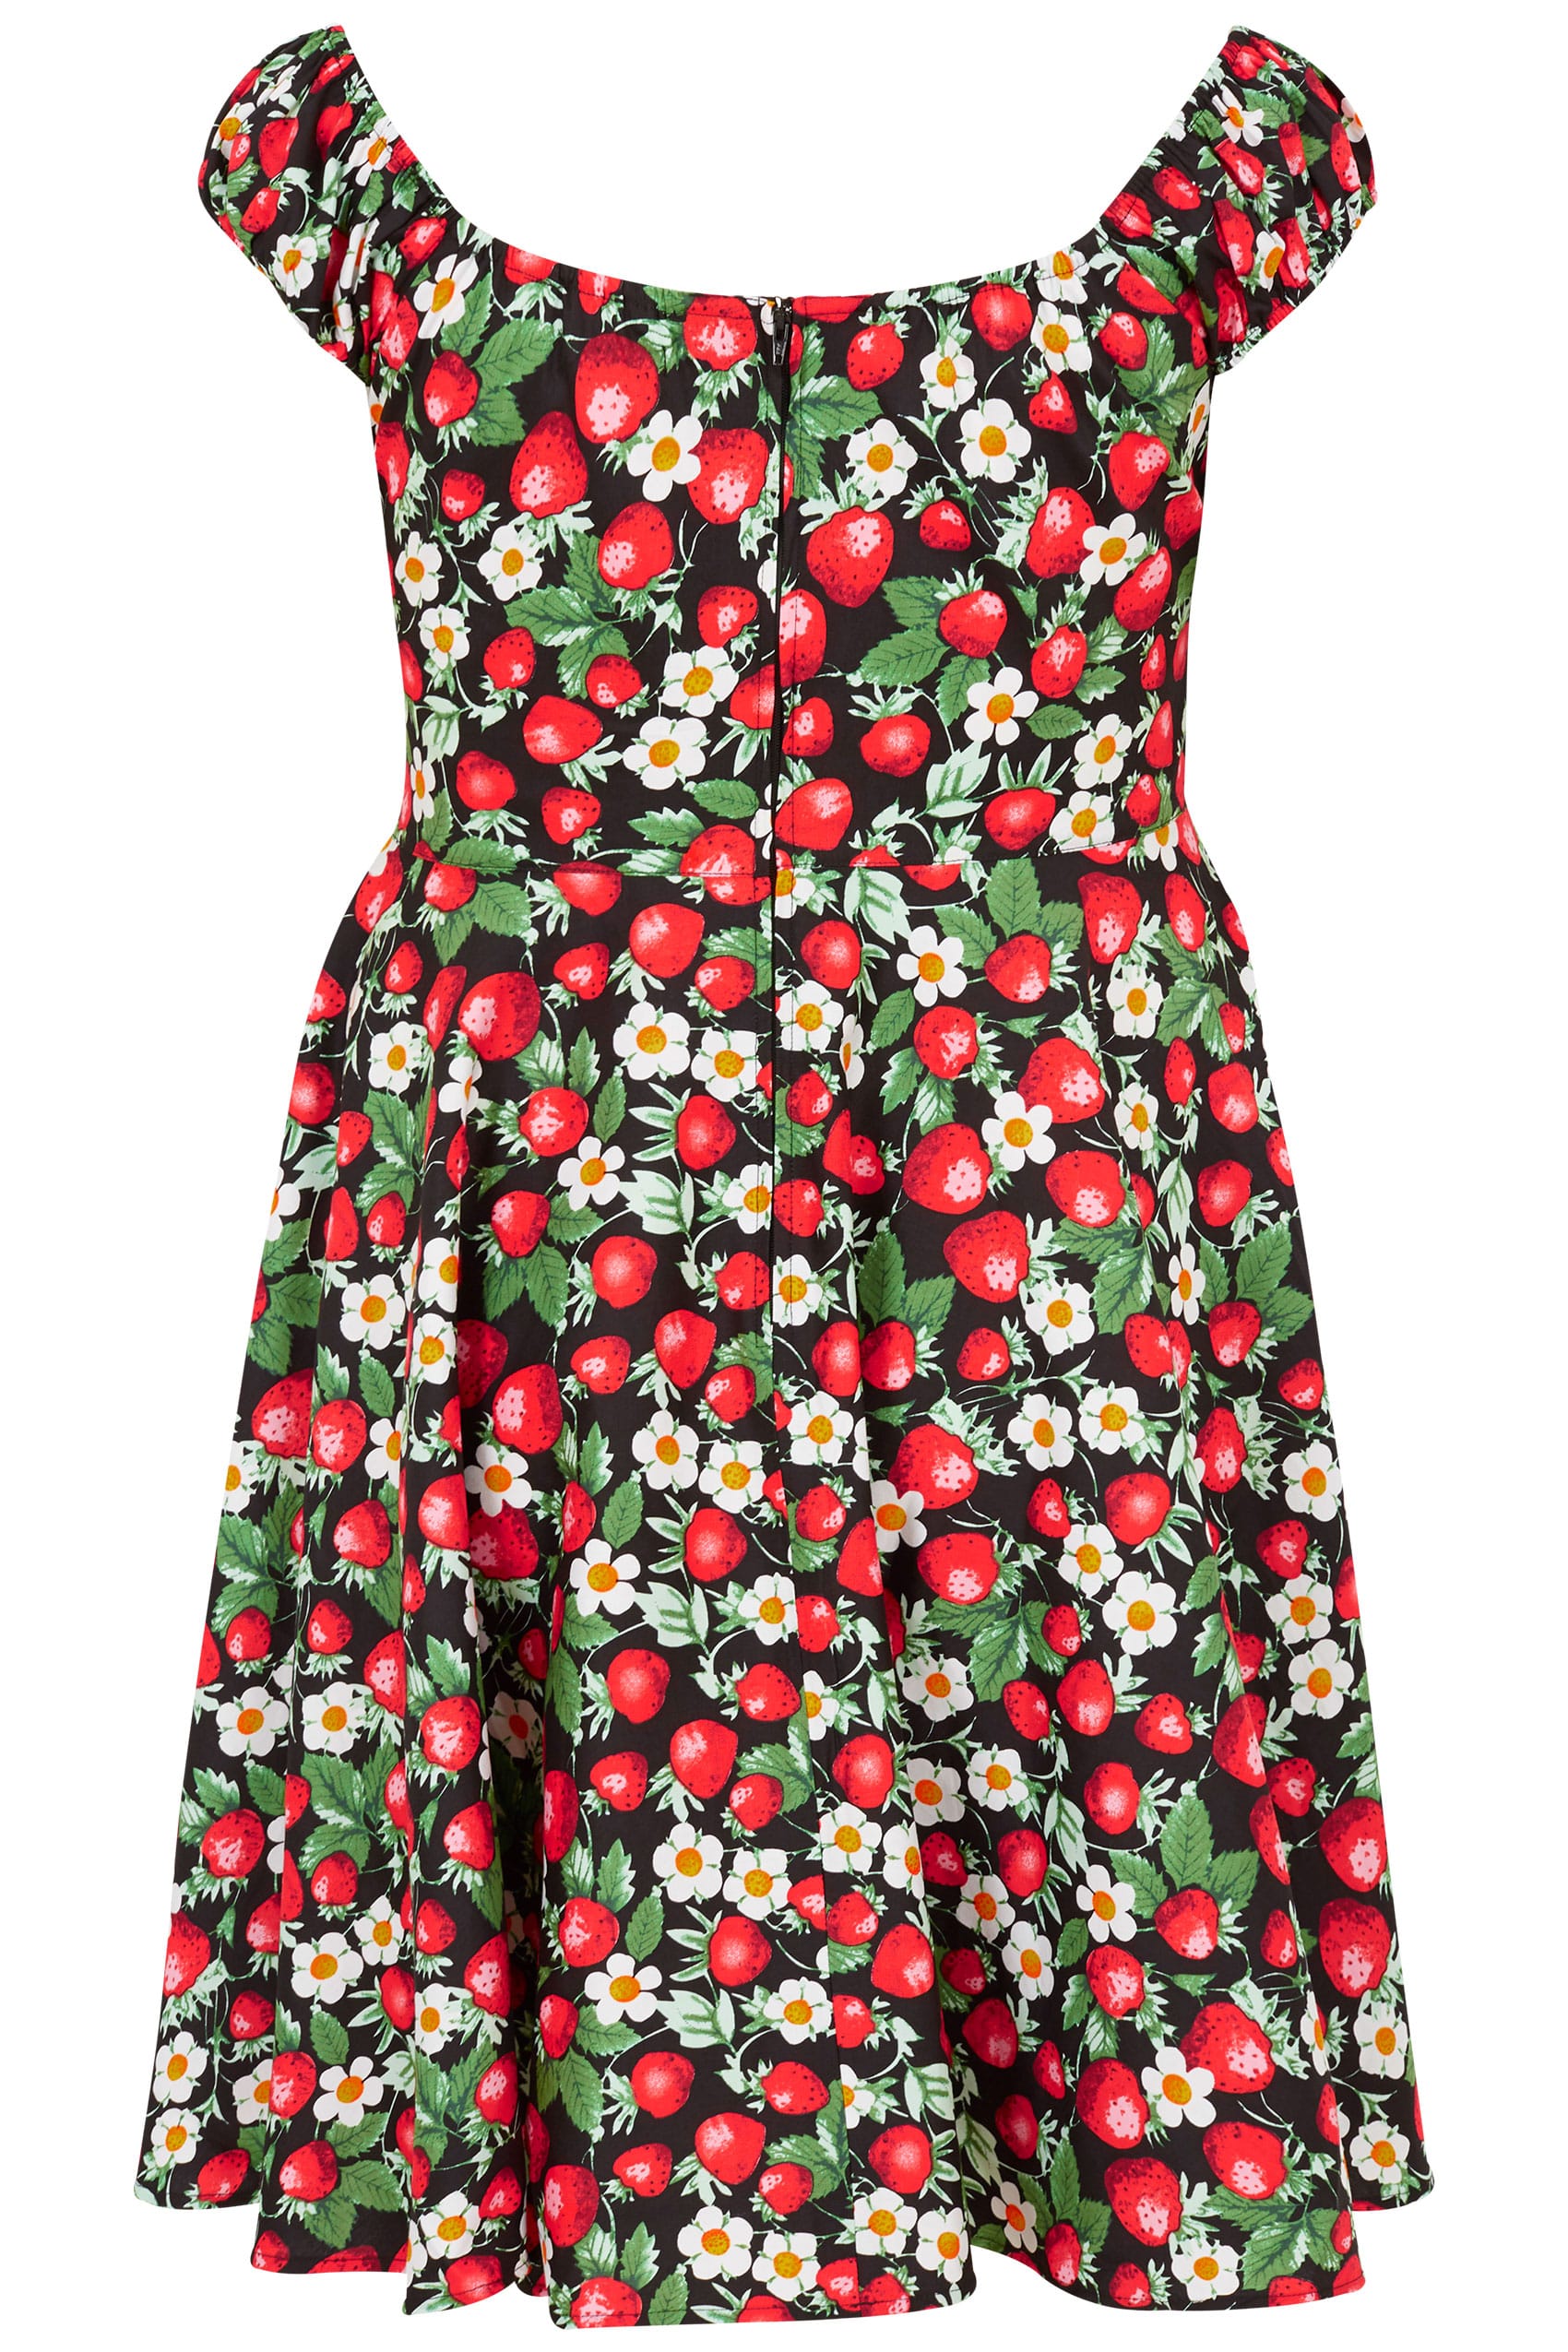 HELL BUNNY Red & Black Strawberry Bardot Dress, plus size 16 to 32